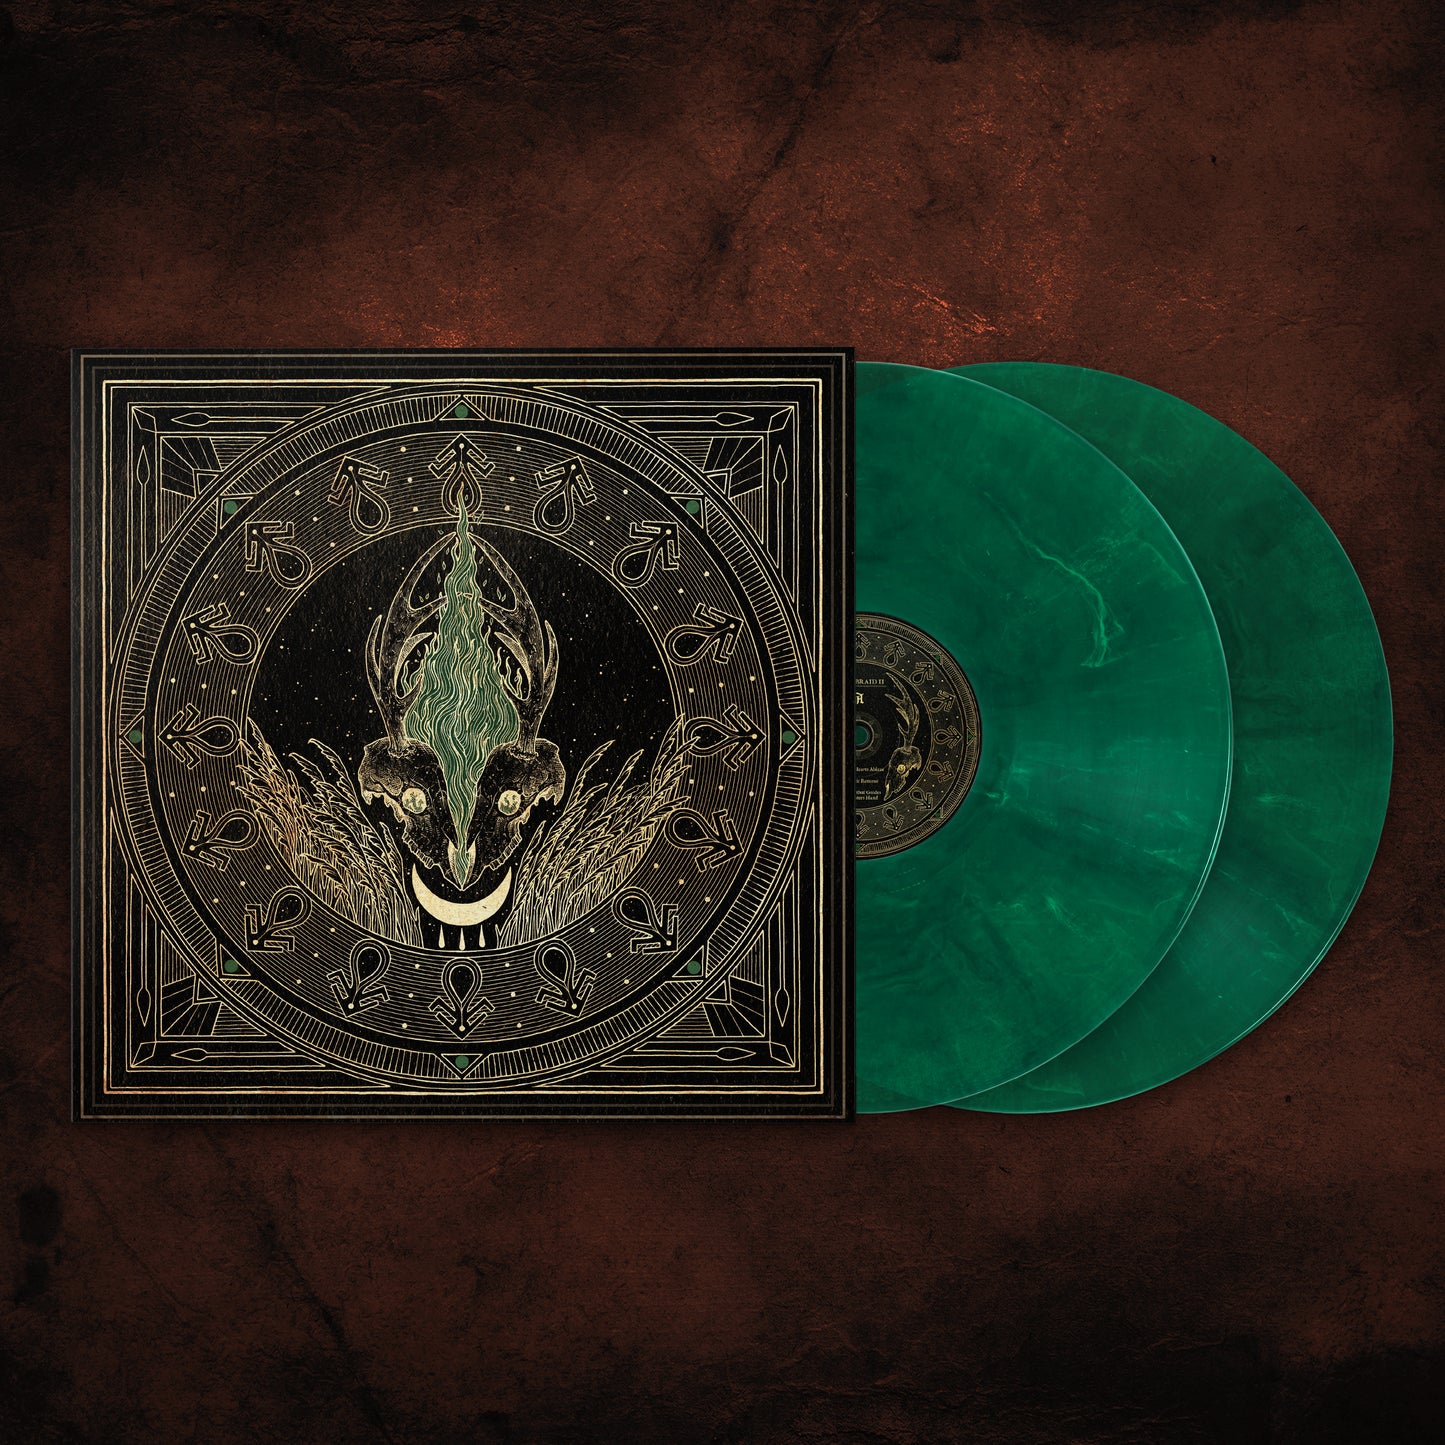 Blackbraid II: Deluxe Gatefold Vinyl, “MOSS” Edition